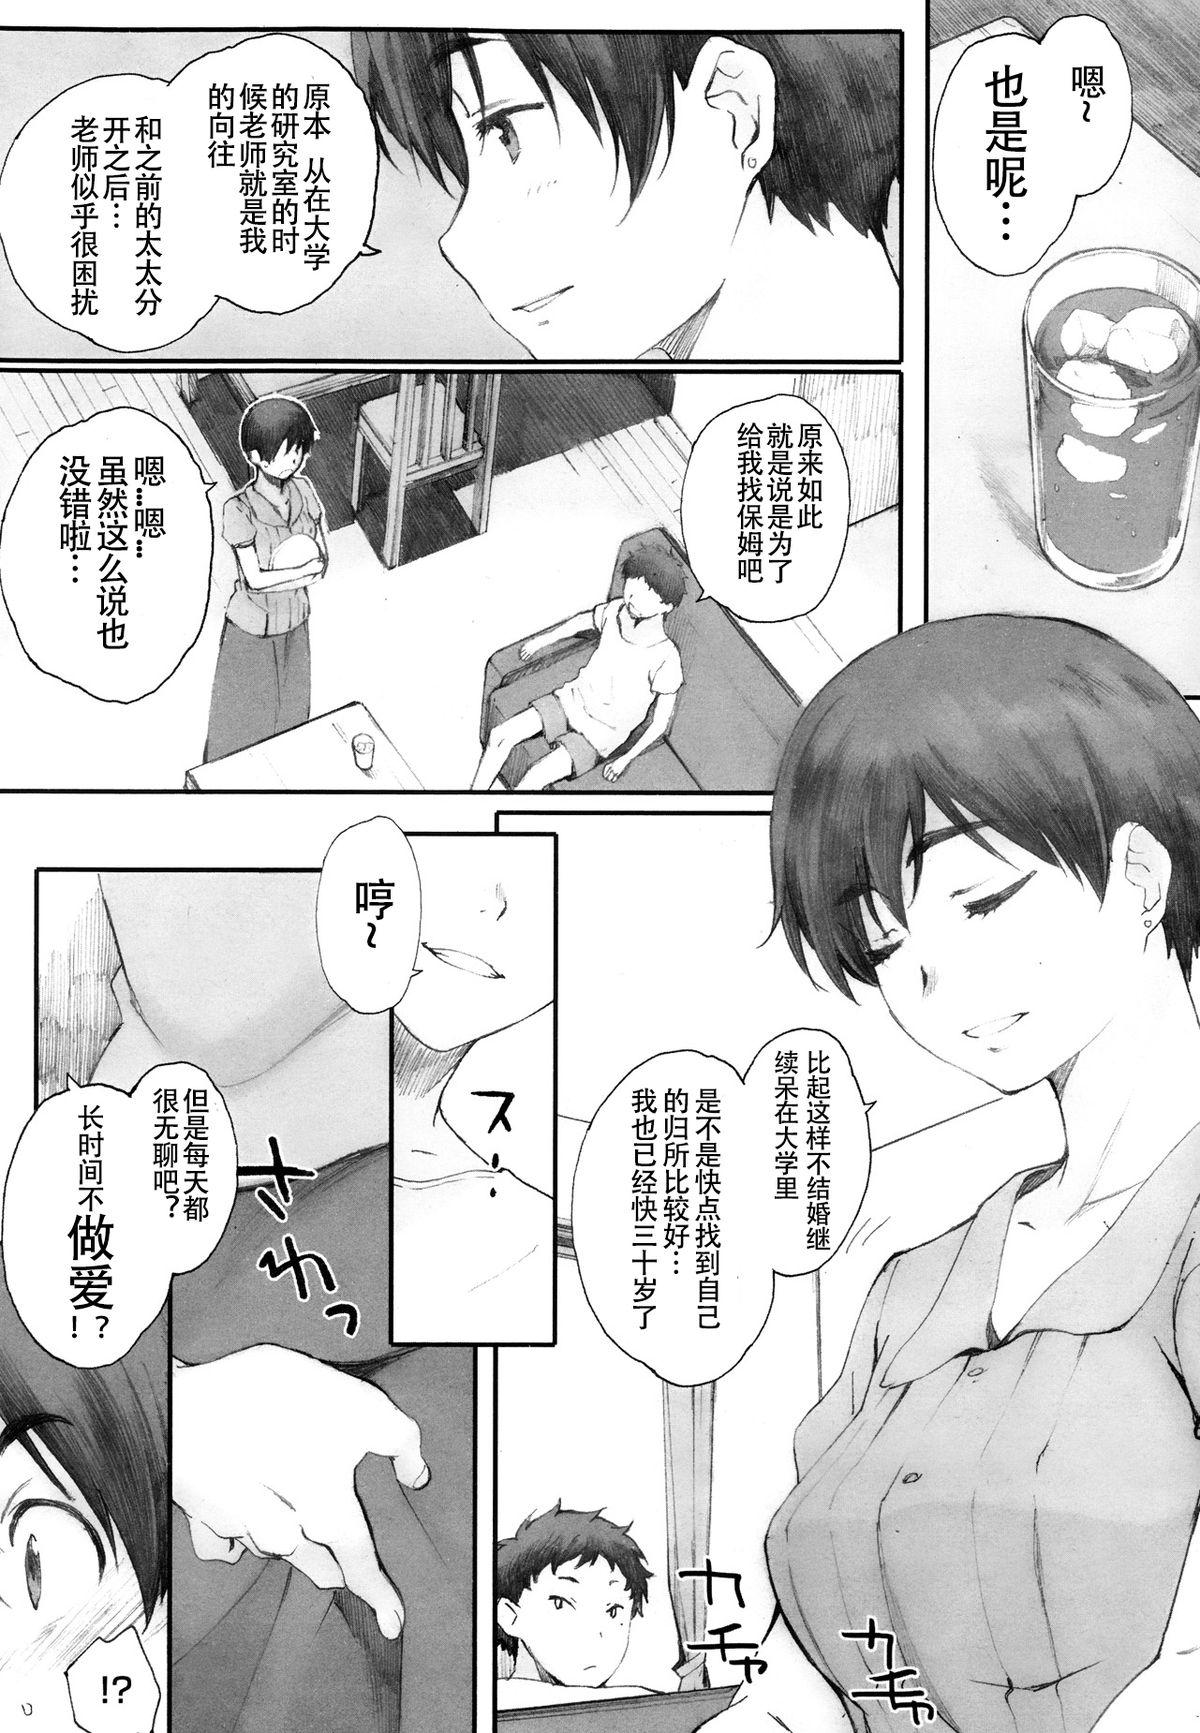 Strapon Kamakiri no su Milfporn - Page 5